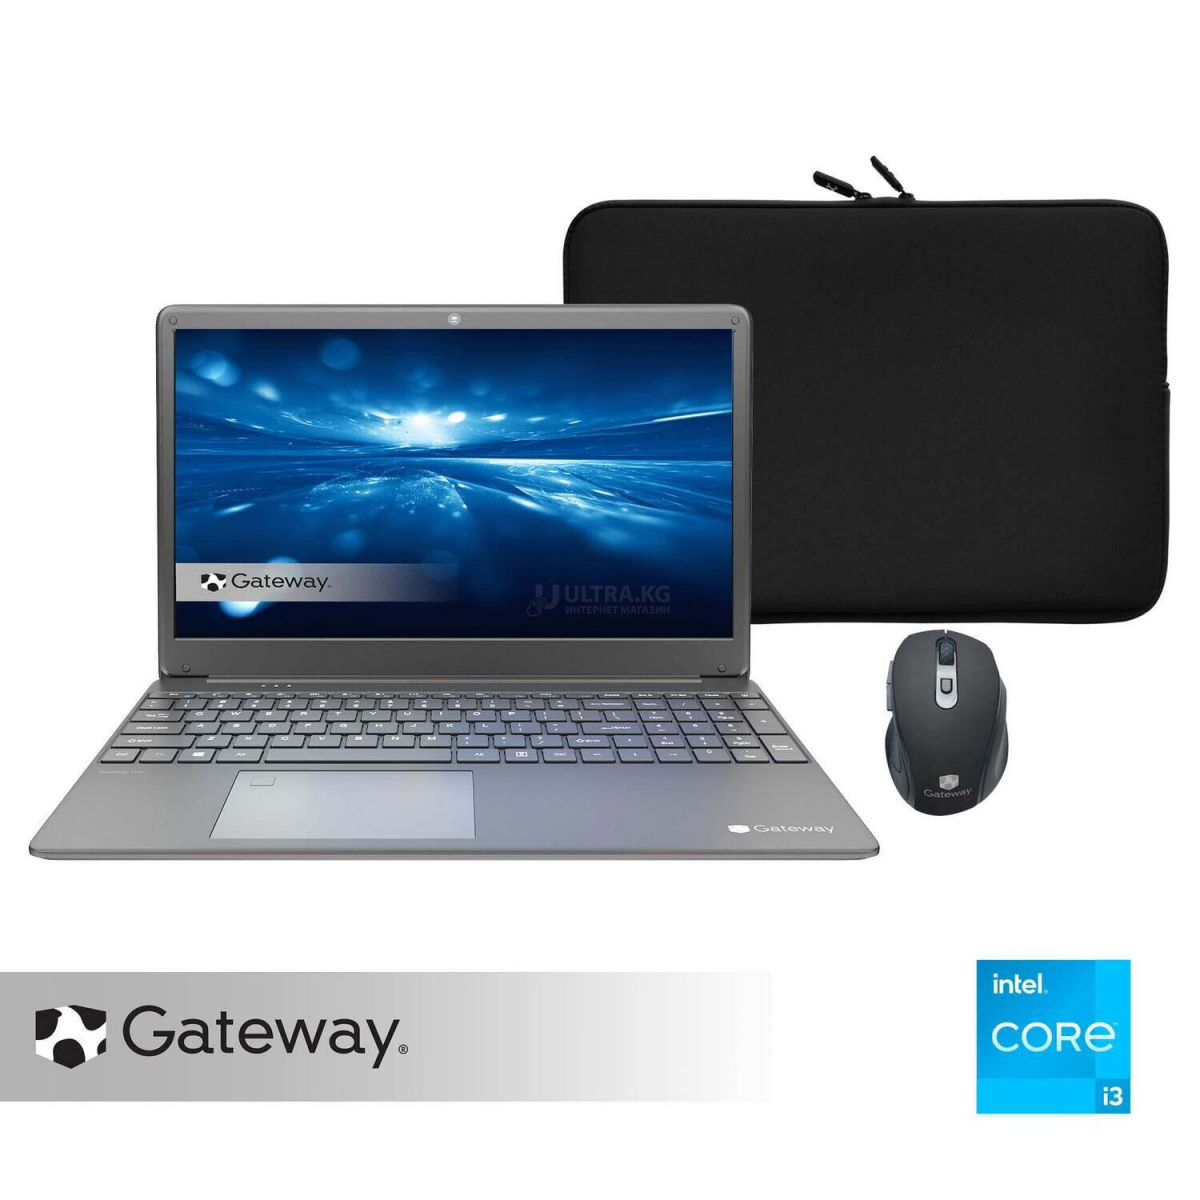 Ноутбук Gateway Ultra Slim i3-1115g4. Ноутбук Gateway 15 Core ¡3. Intel Core i3-1115g4. Gateway 15.6 Ultra Slim.